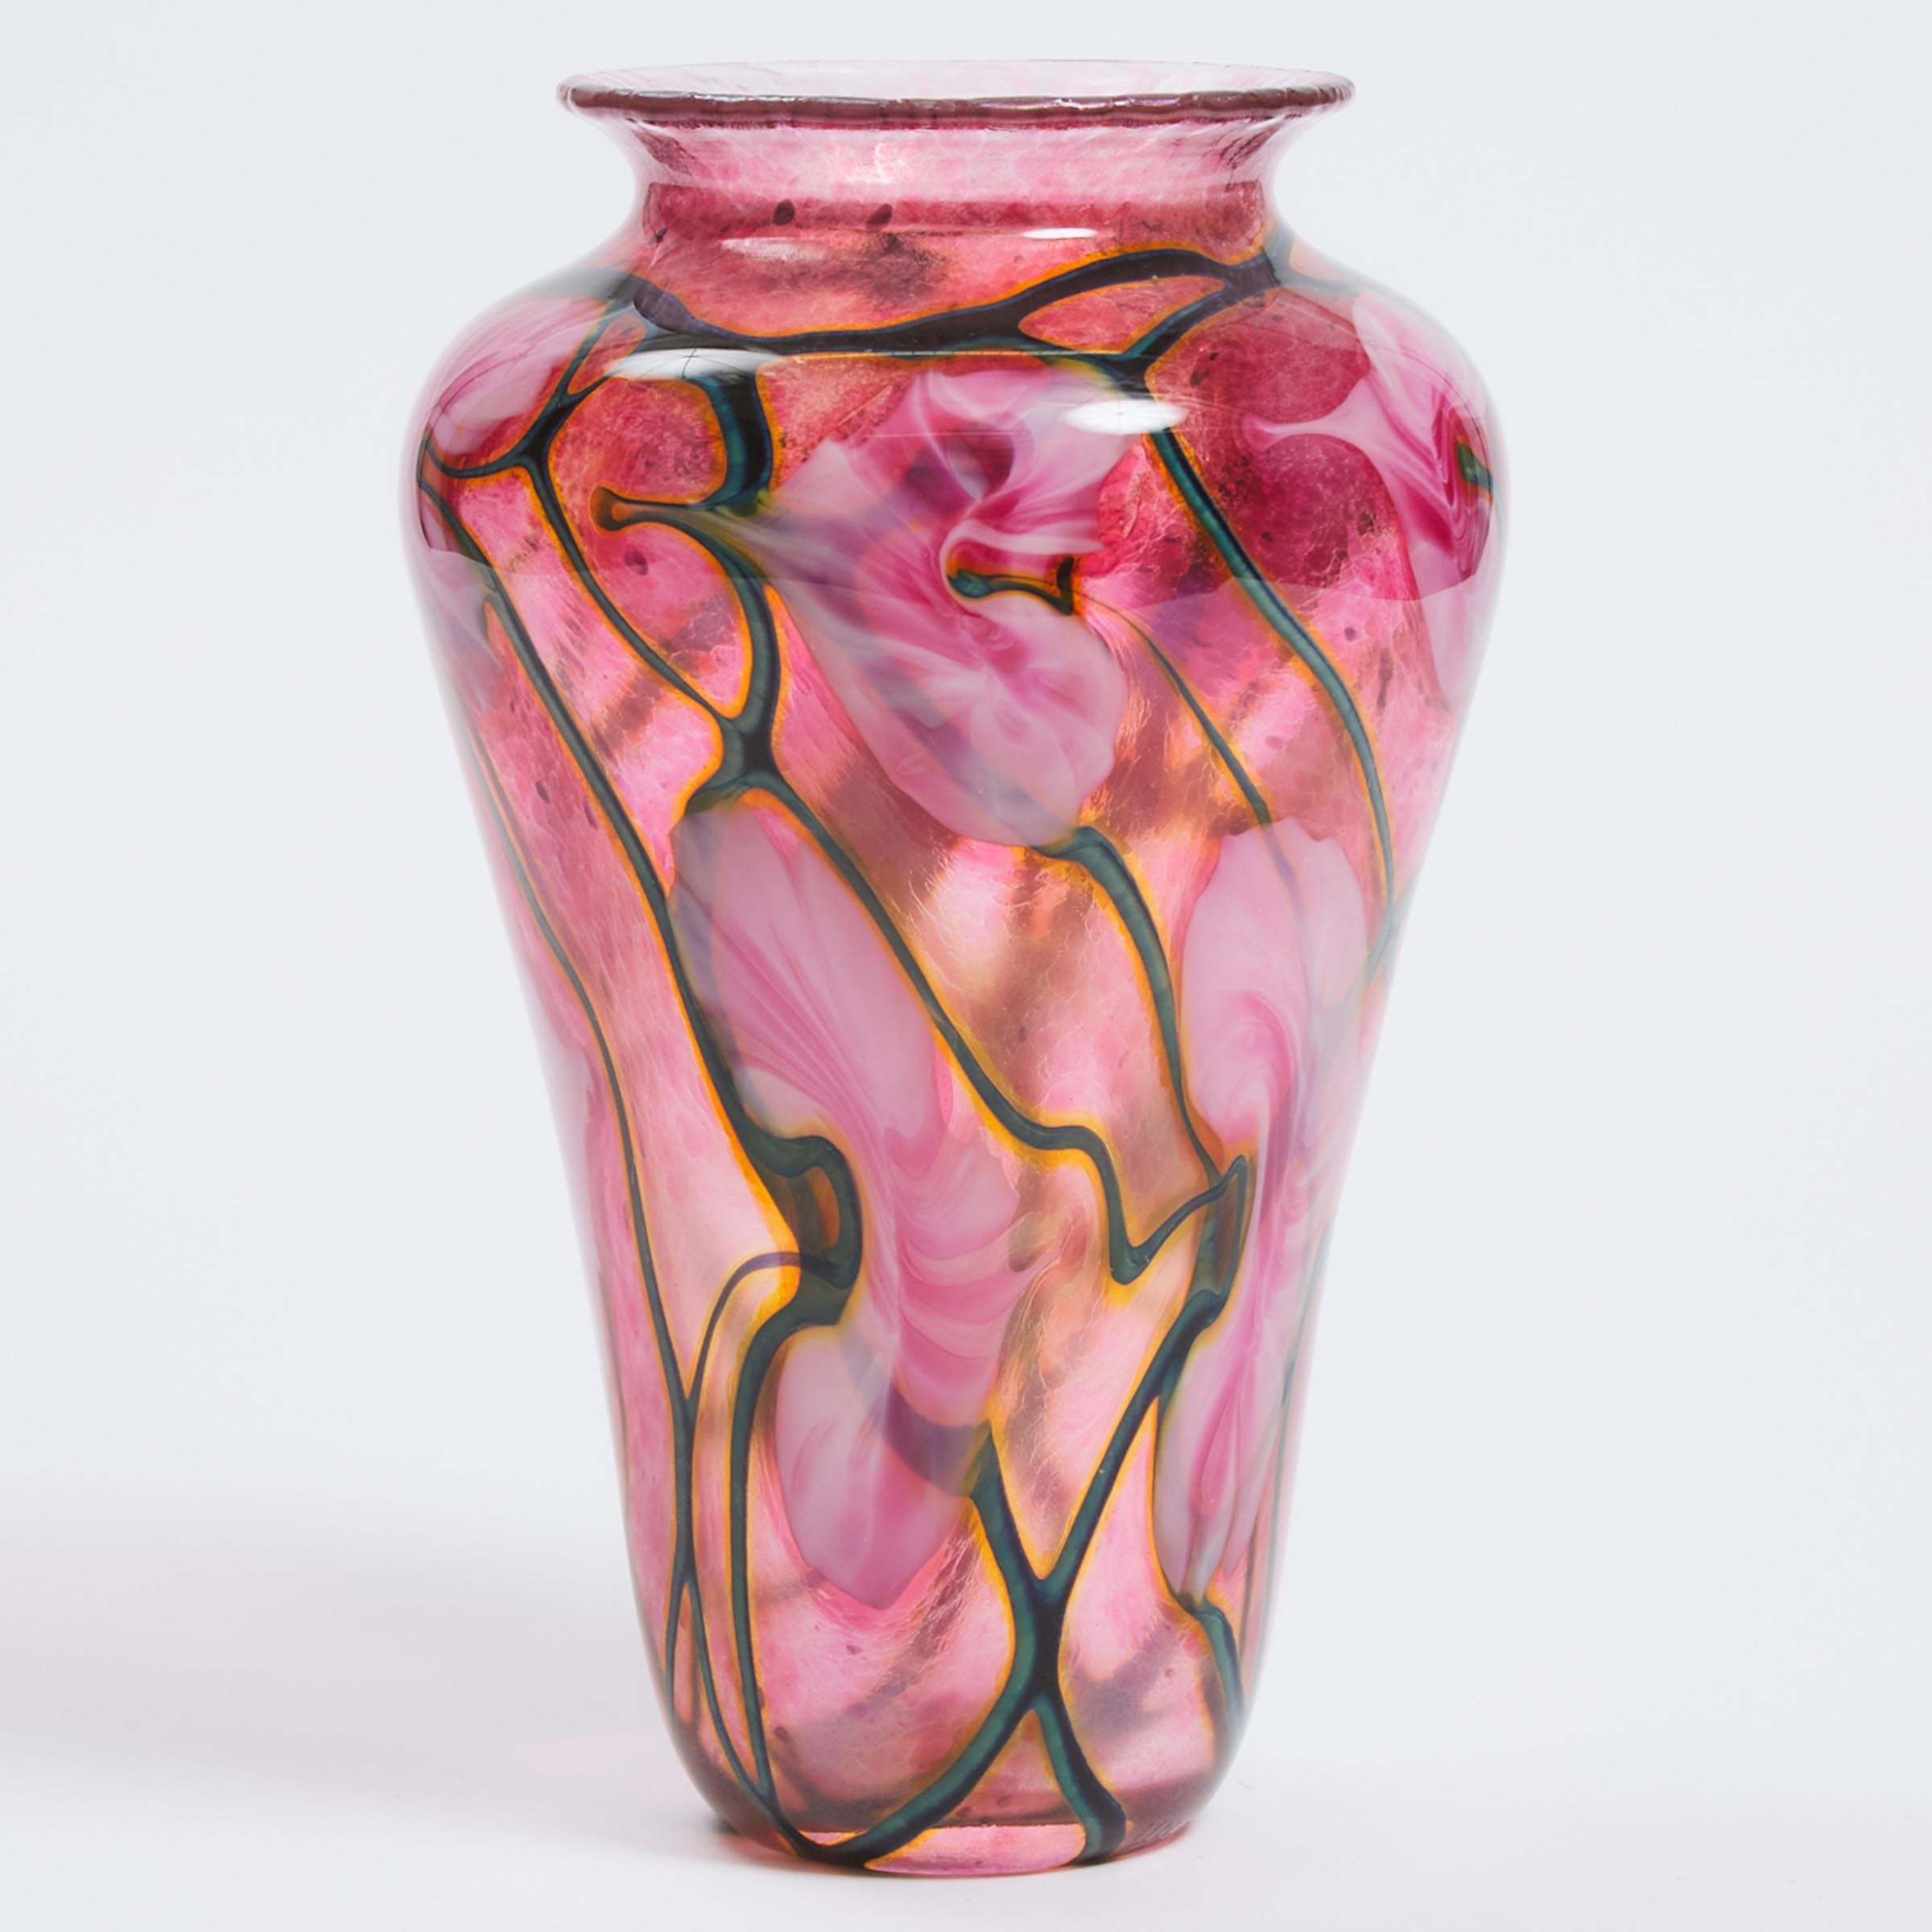 John Lotton (American, b.1964), 'Leaf and Vine' Glass Vase, 1992